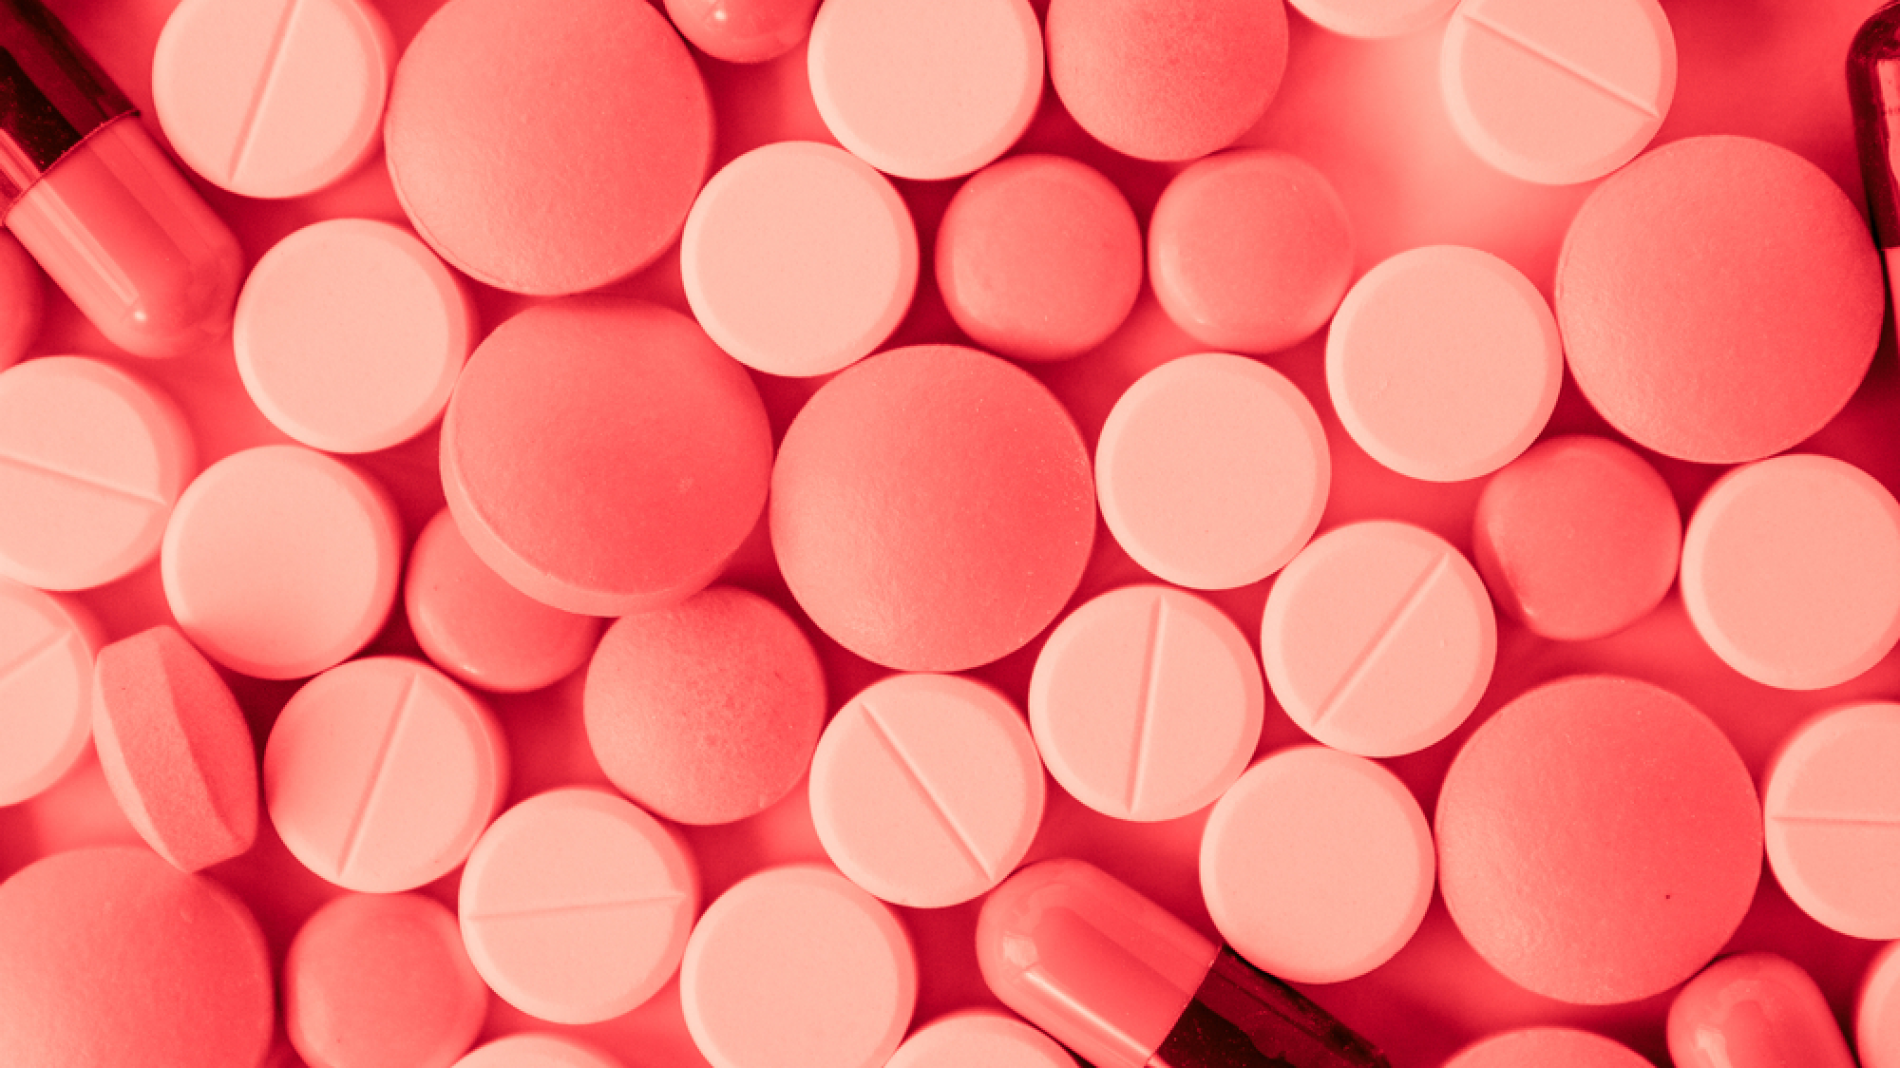 Some pink ecstasy pills